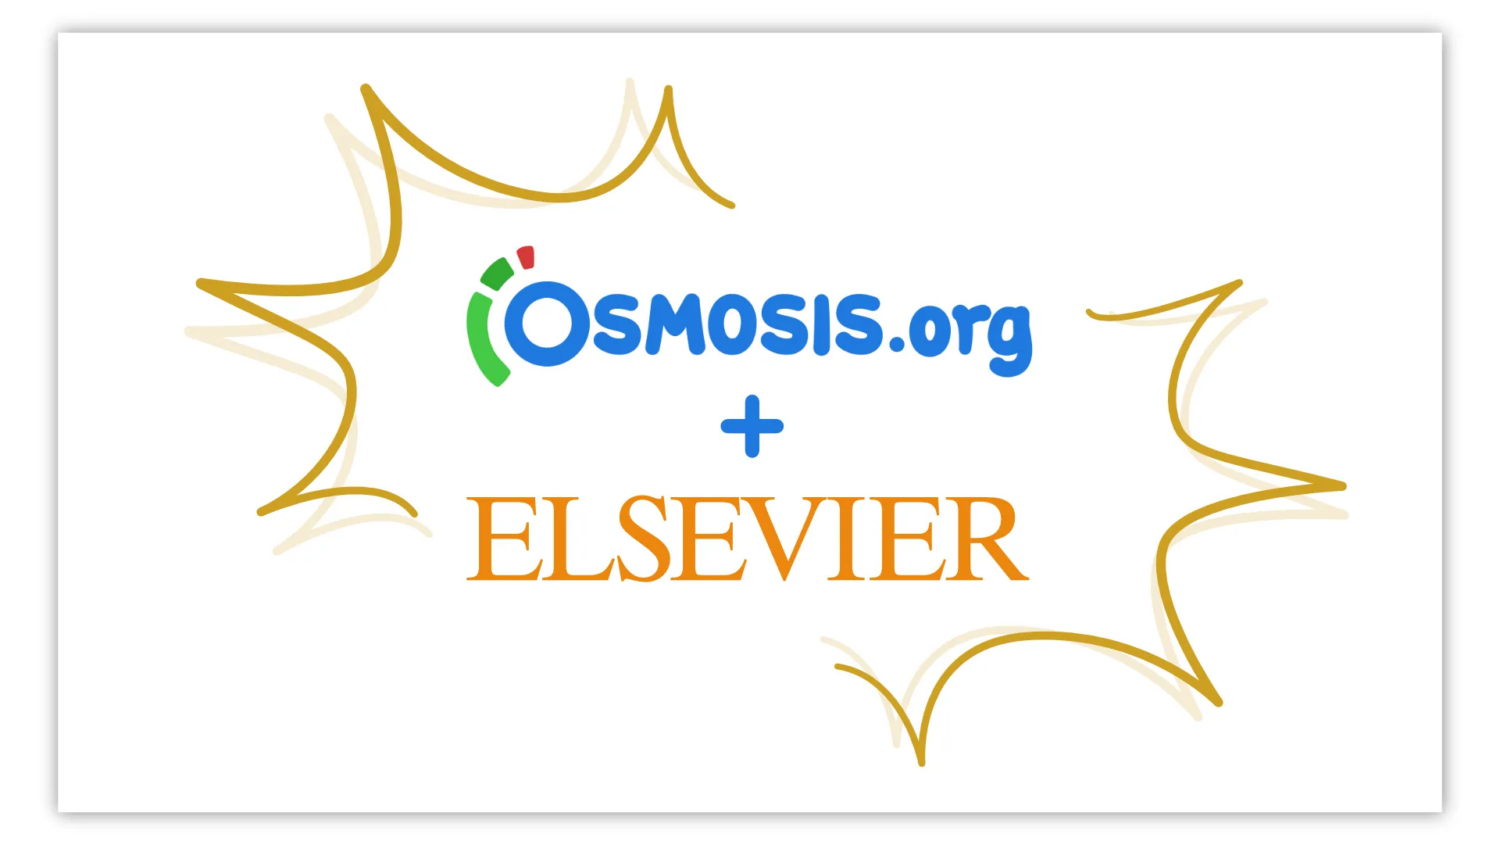 Elsevier Acquires Digital Health Education Platform Osmosis